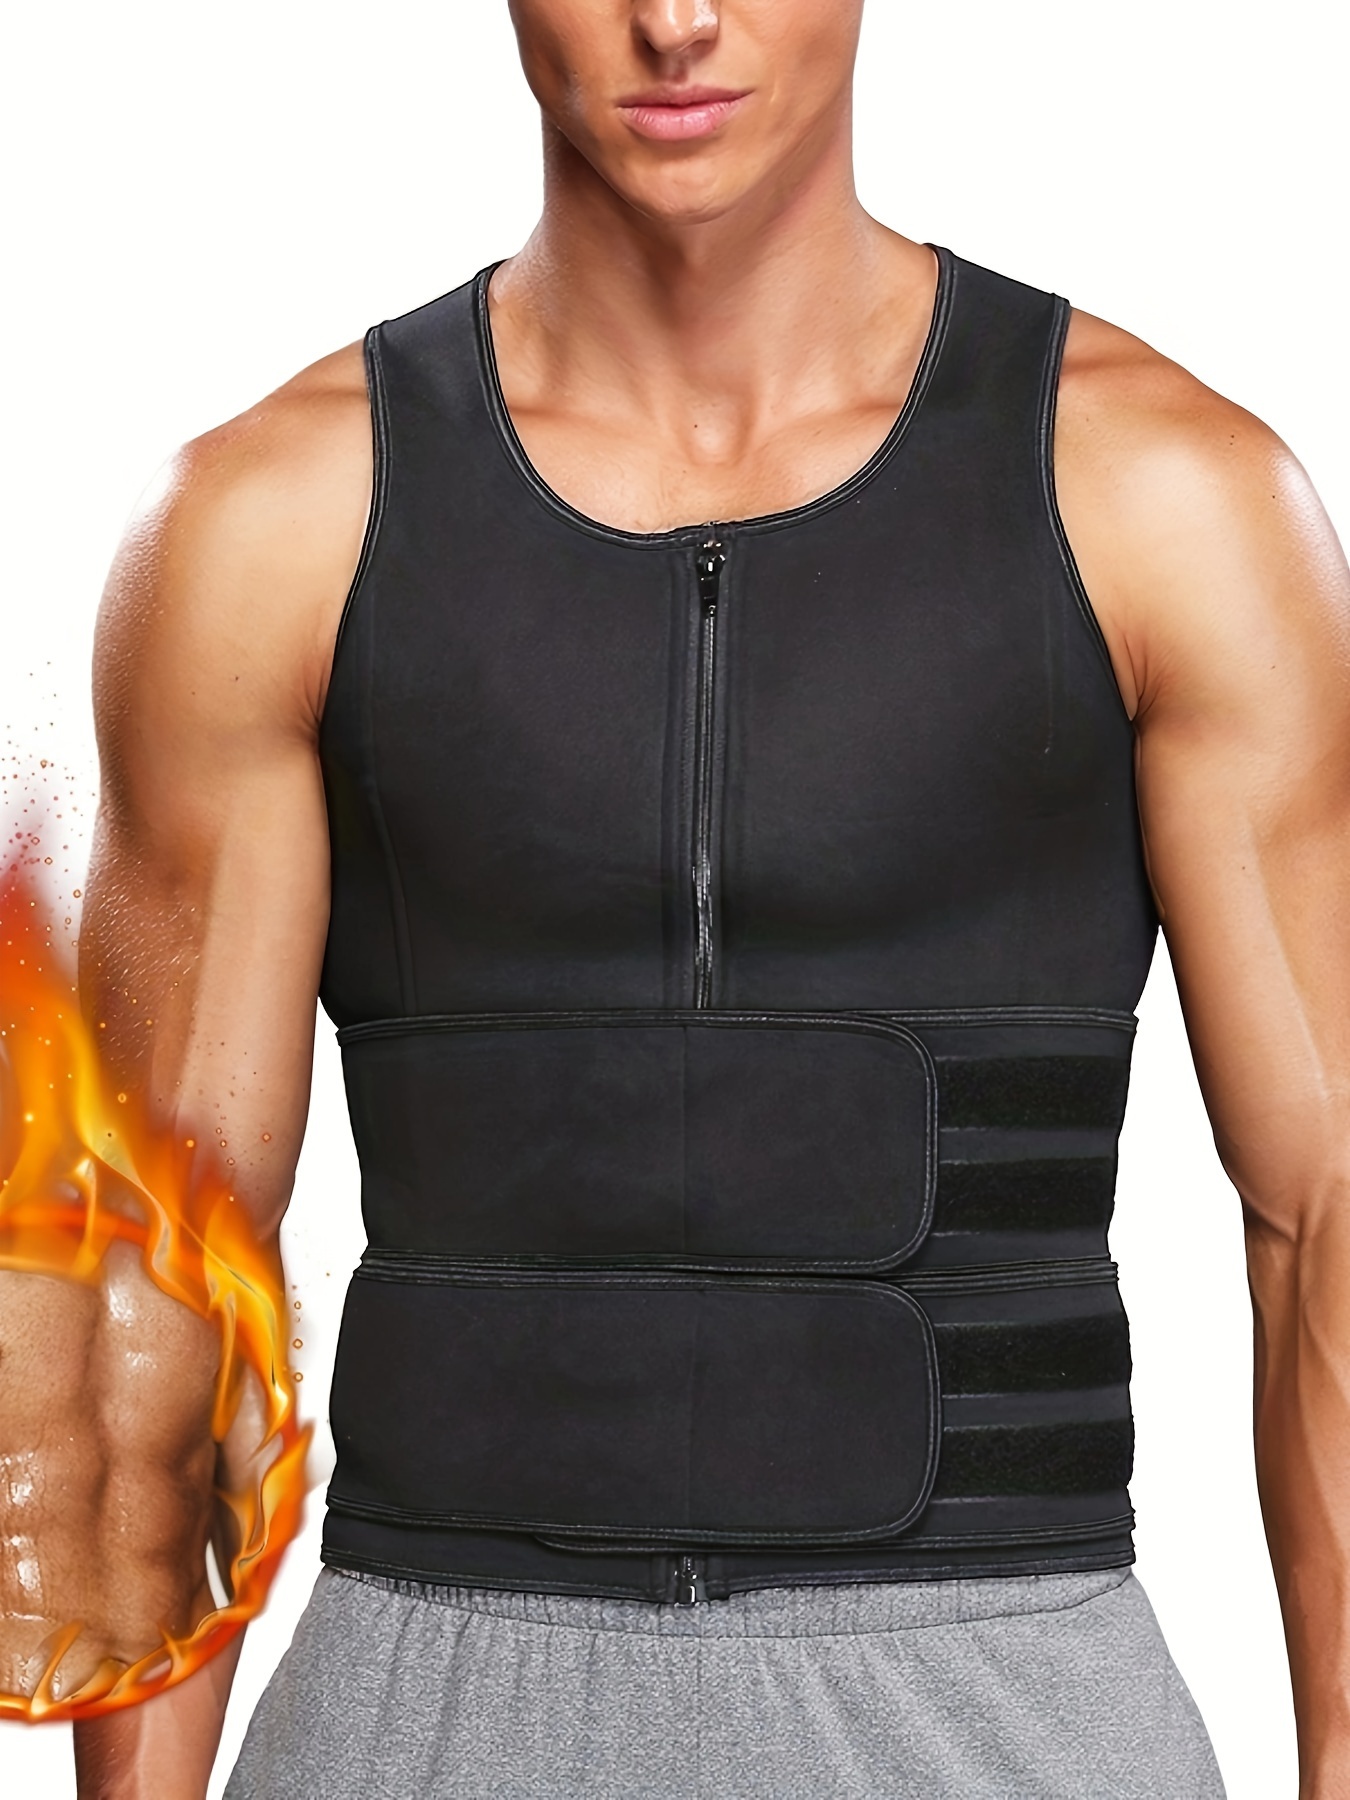 Men's Body Shaper Waist Trainer Sauna Suits Sweat Vest Slimming Weight Loss  Fitness Tummy Control Fat Burner Workout Corset